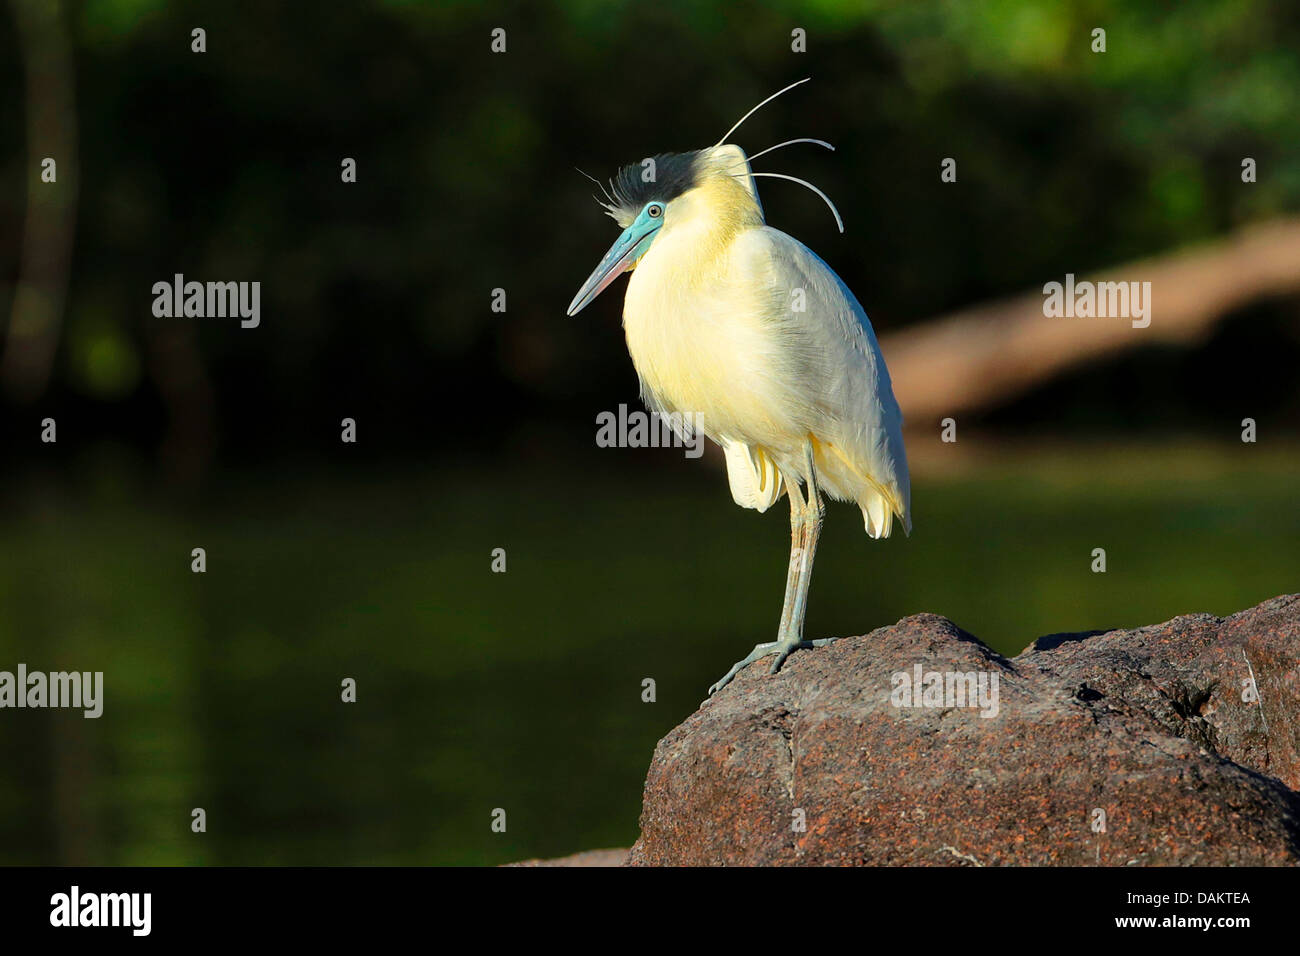 Capped heron (Pilherodius pileatus), standing on a stone, Brazil, Cristalino Stock Photo